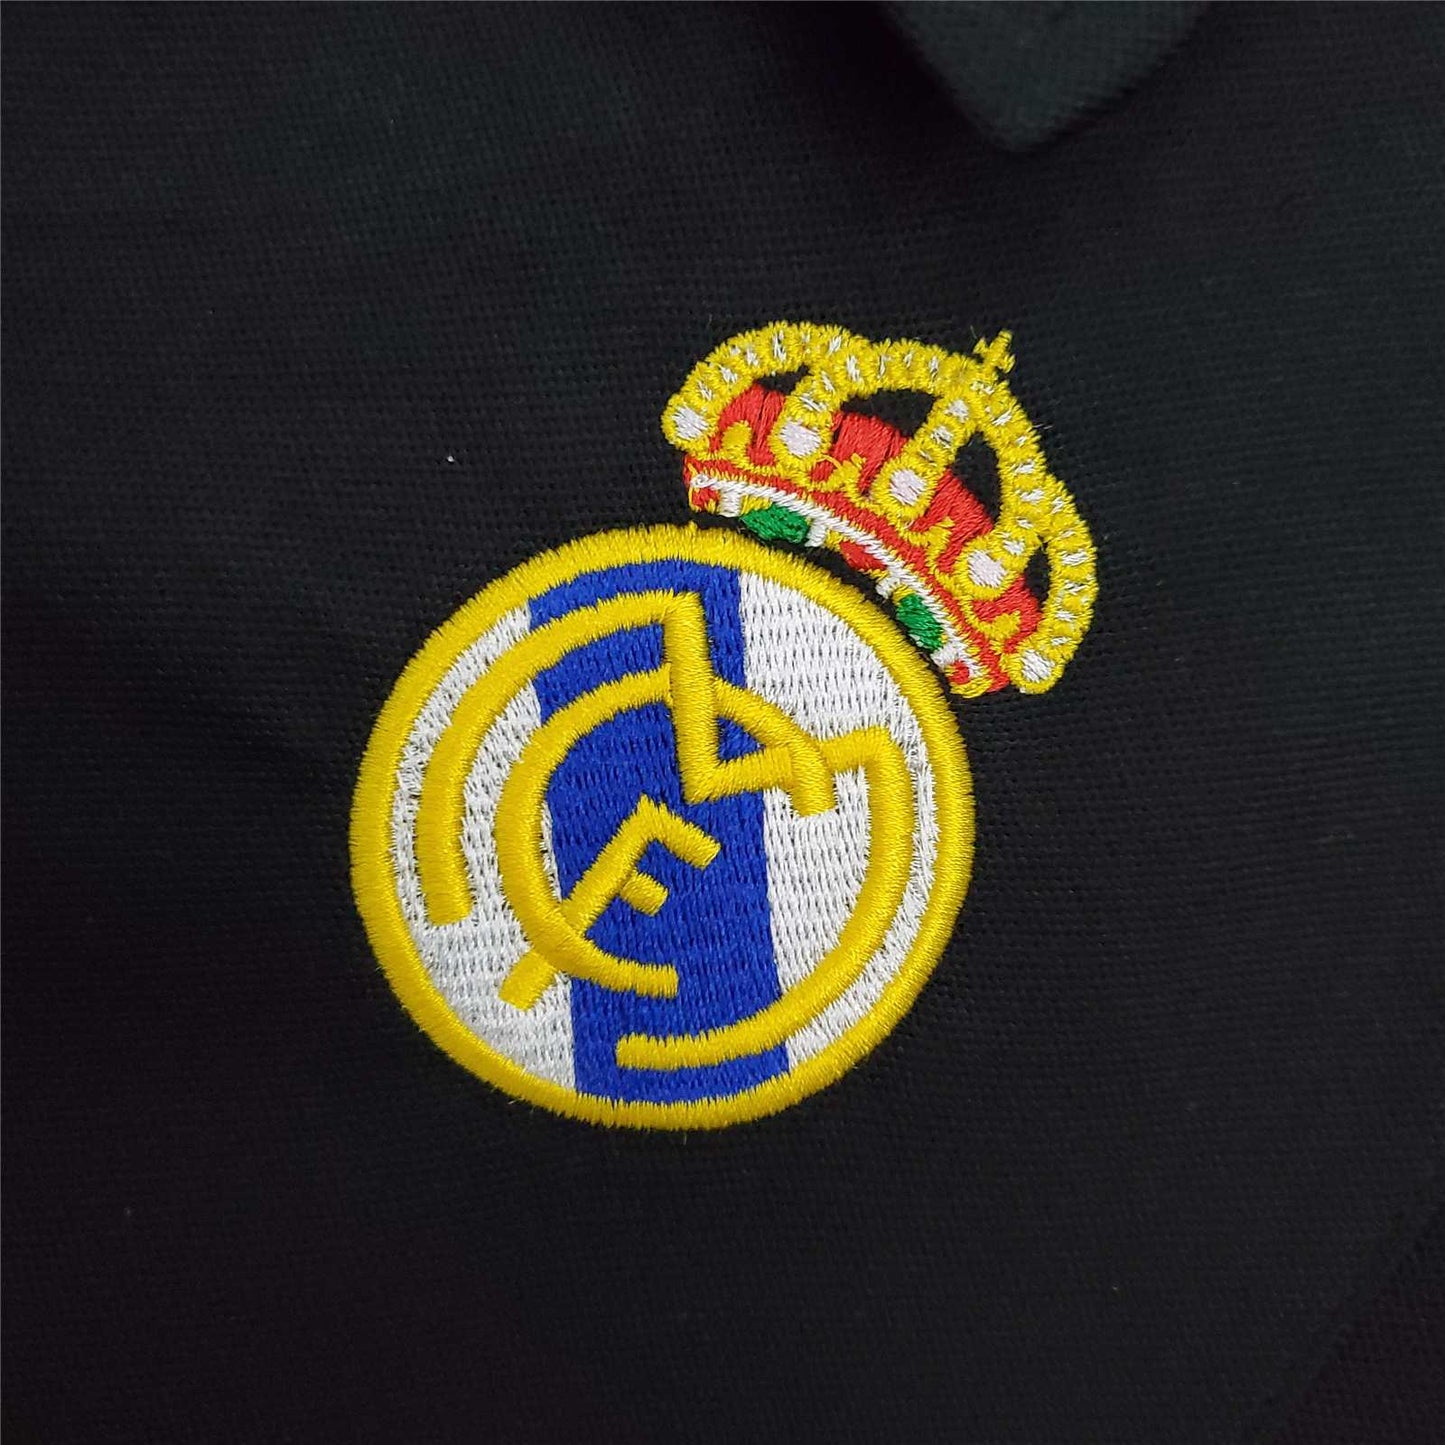 Real Madrid 02-03 Away No Sponsor Shirt